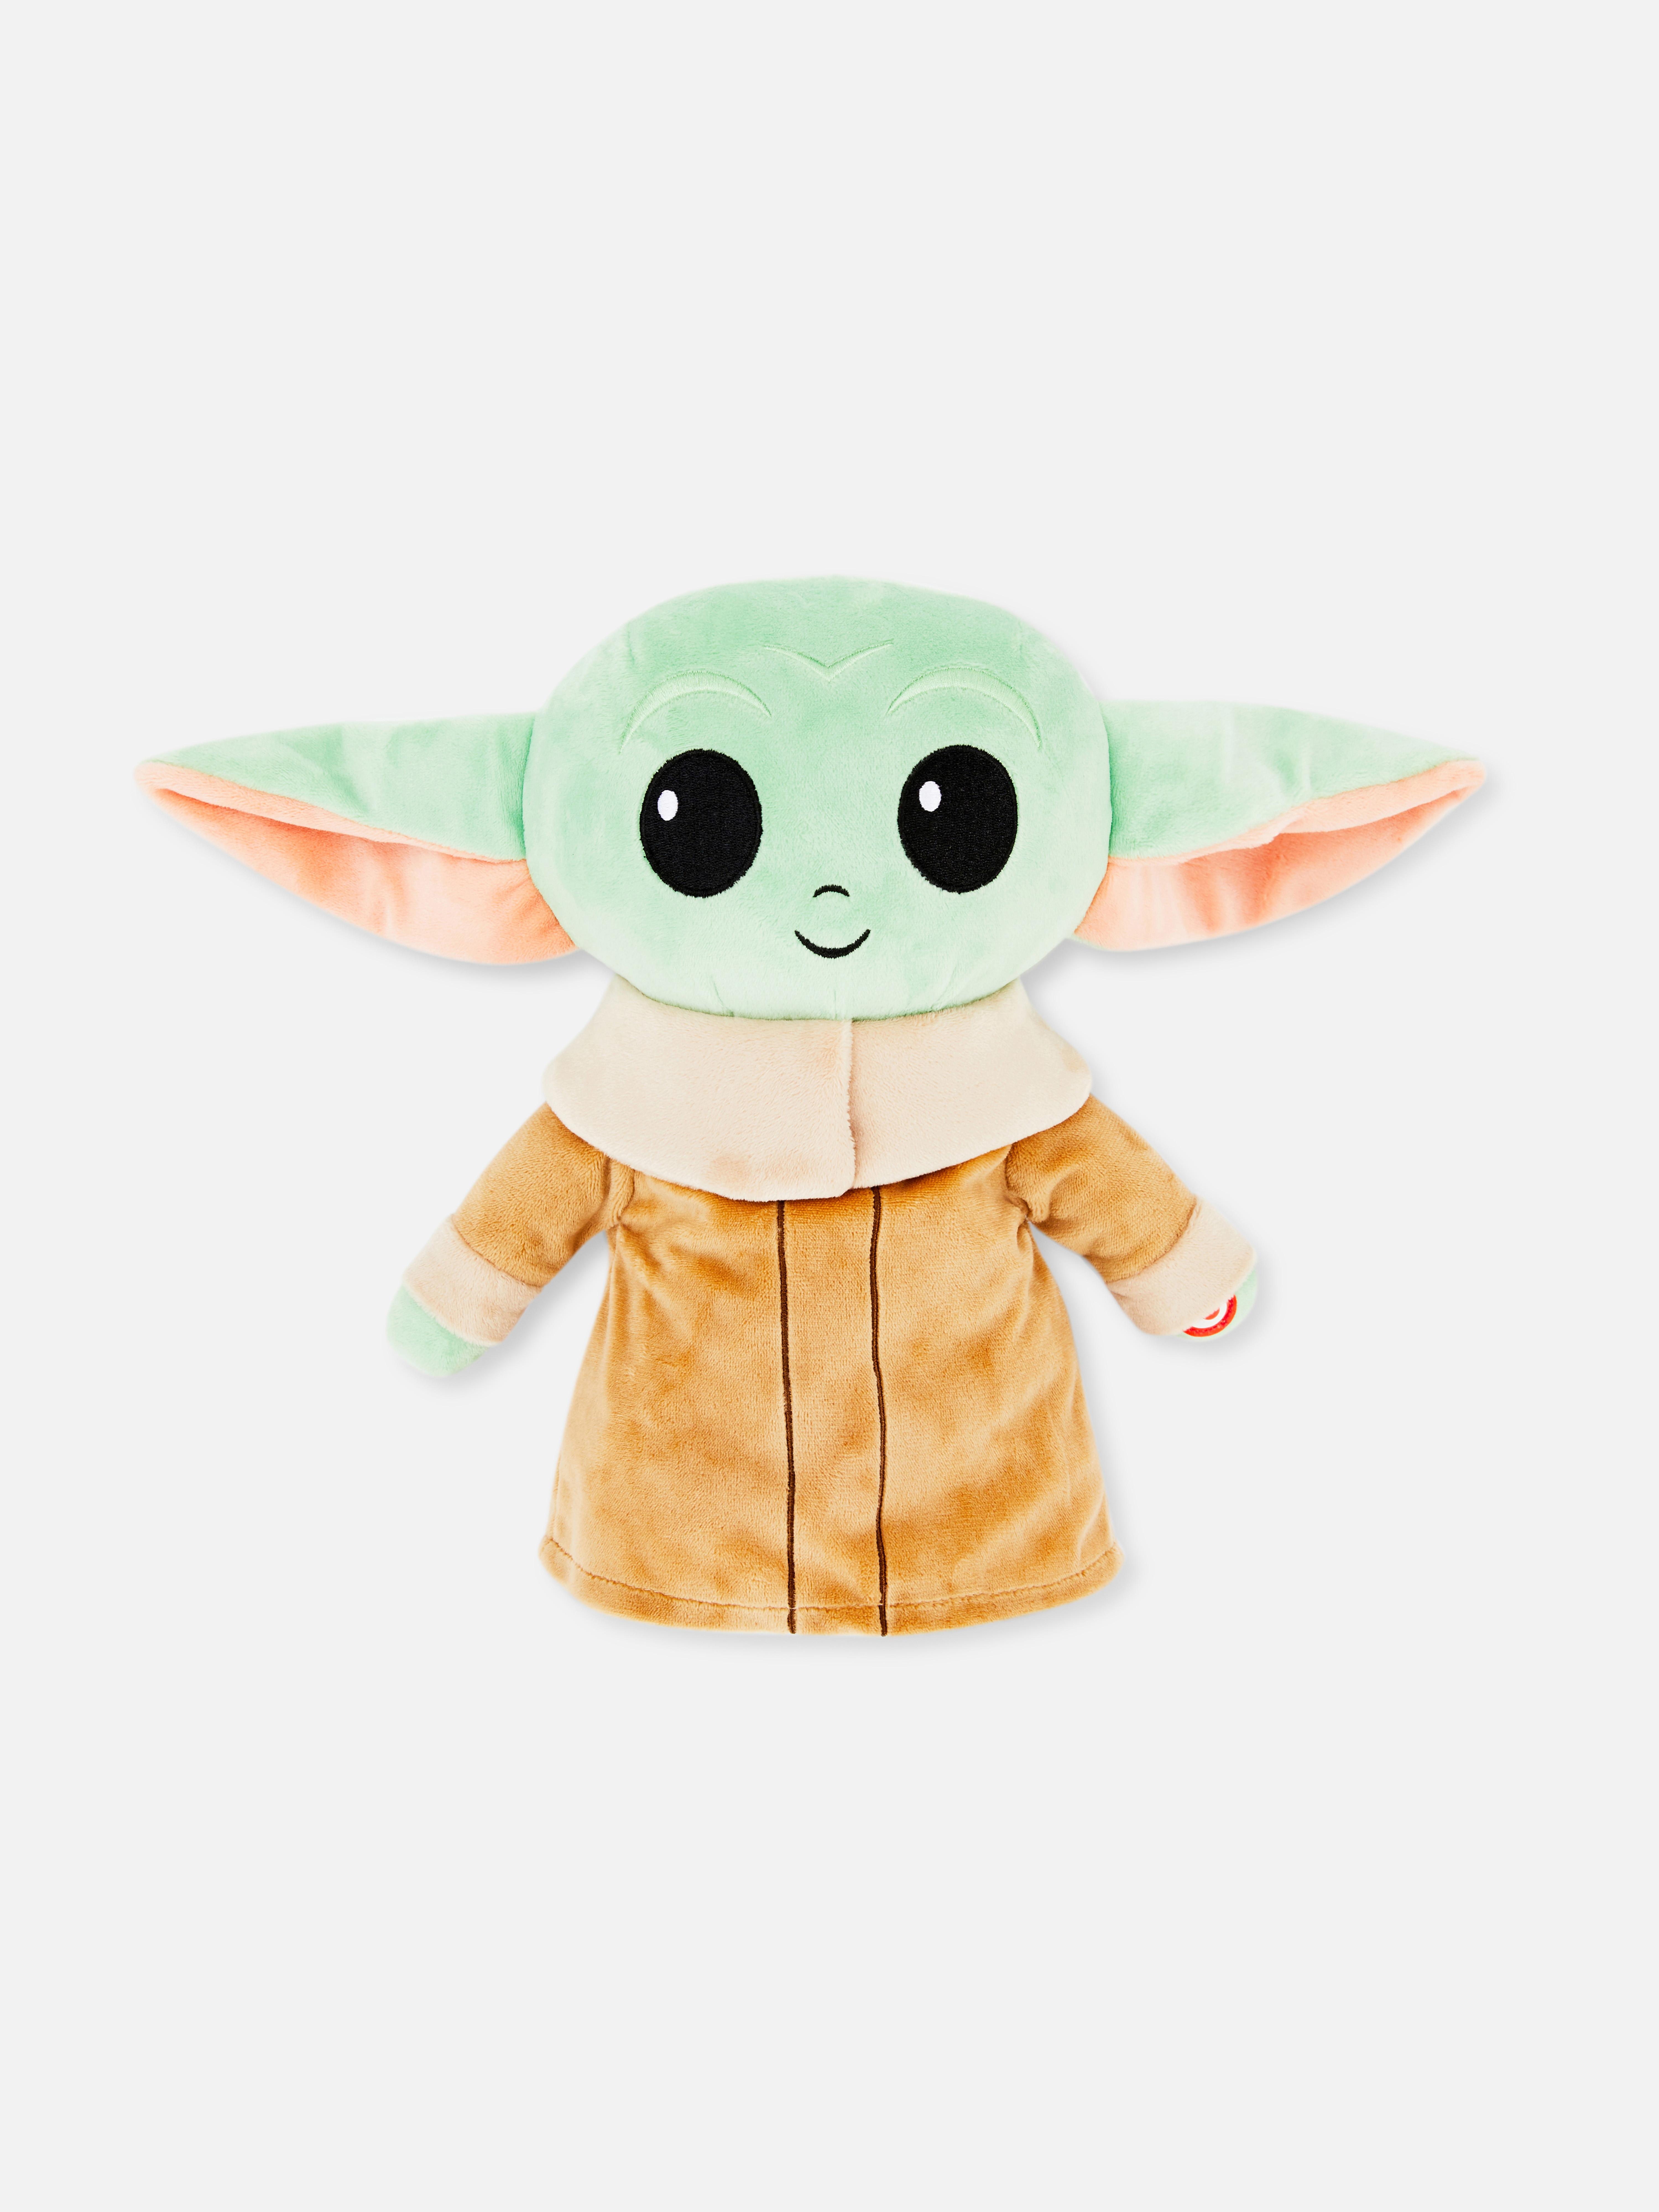 Star Wars Baby Yoda Plush Toy Multi